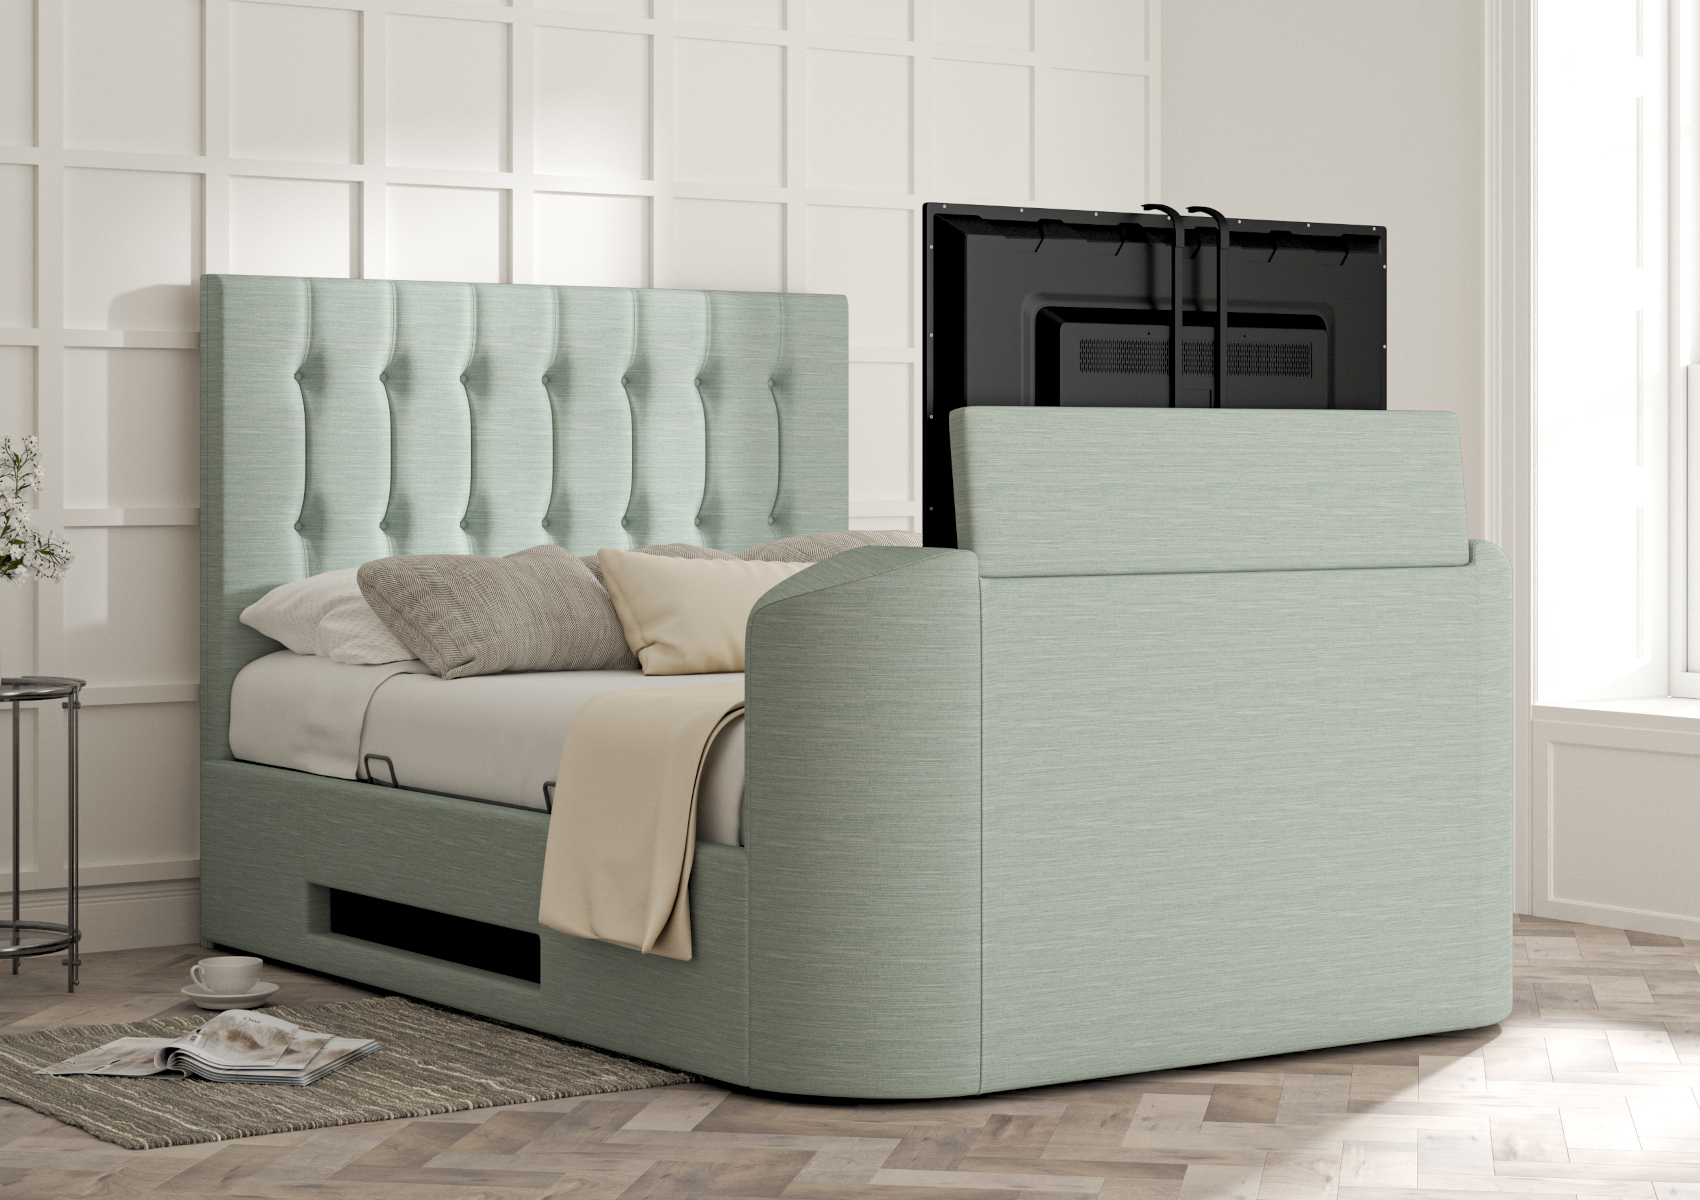 View Dorchester Linea SeaBlue Upholstered Super King Multifunctional Ottoman Smart TV Bed Time4Sleep information